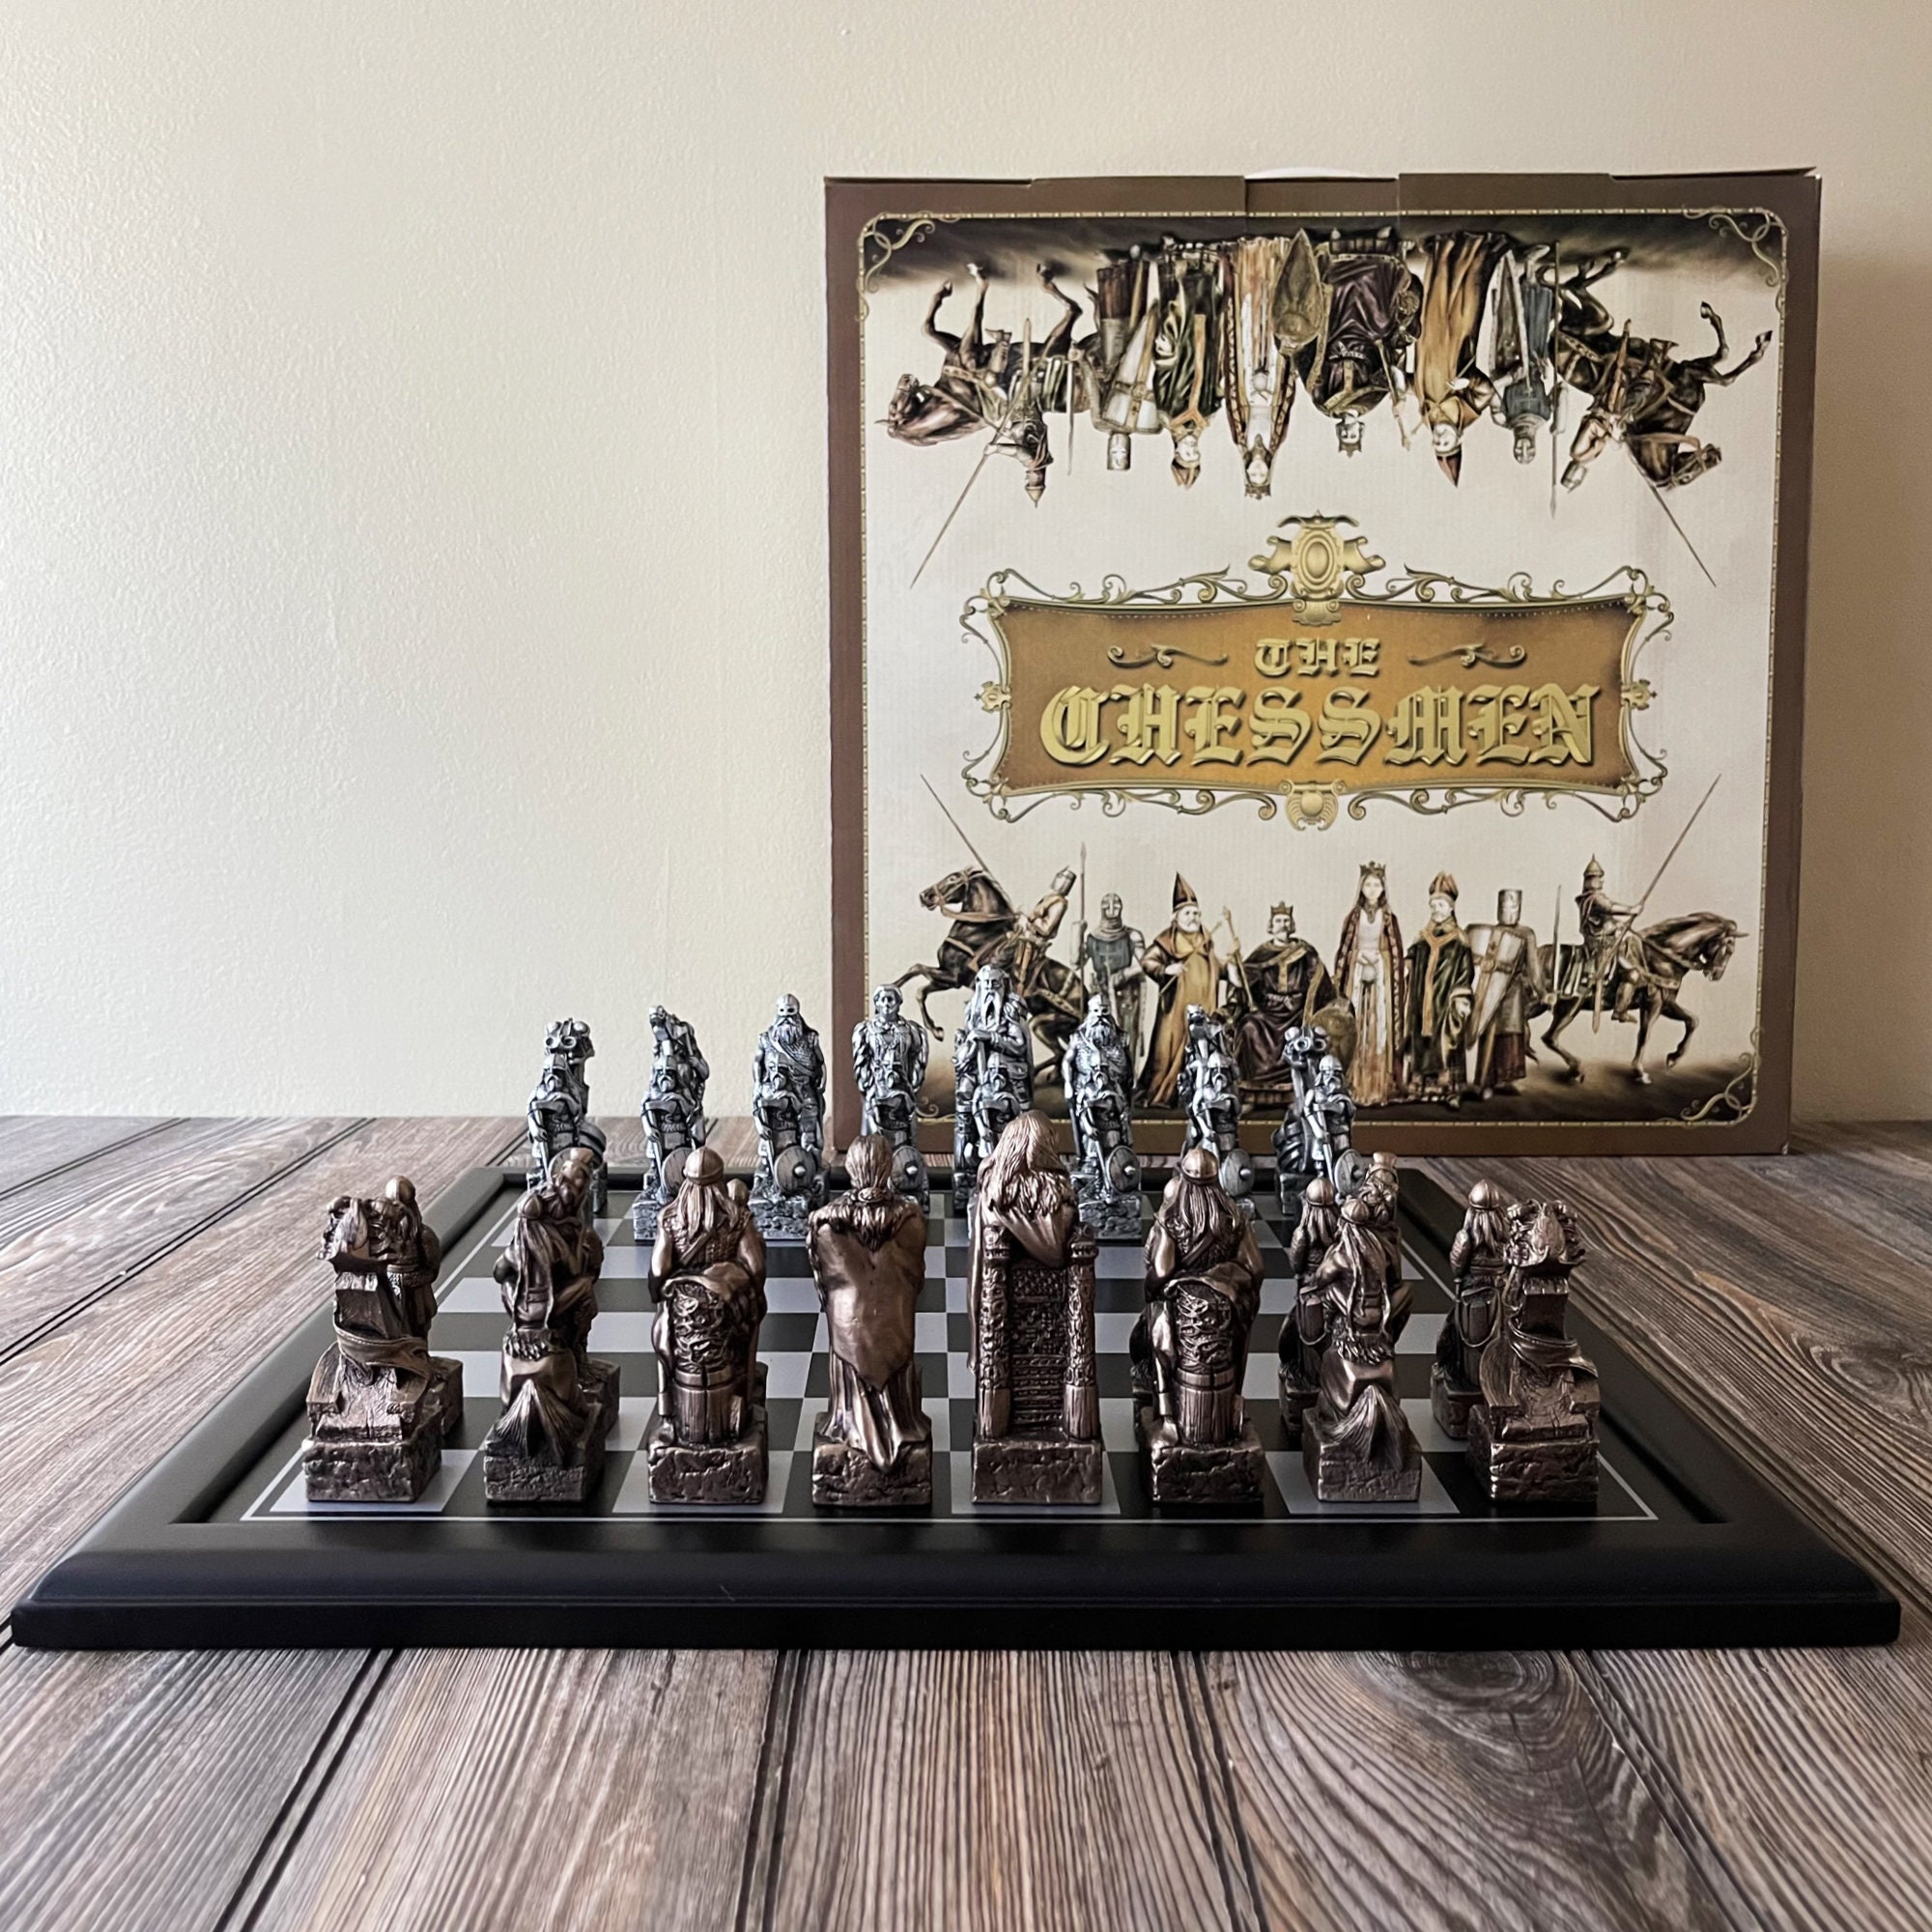 Chess Knights: Viking Lands - Metacritic